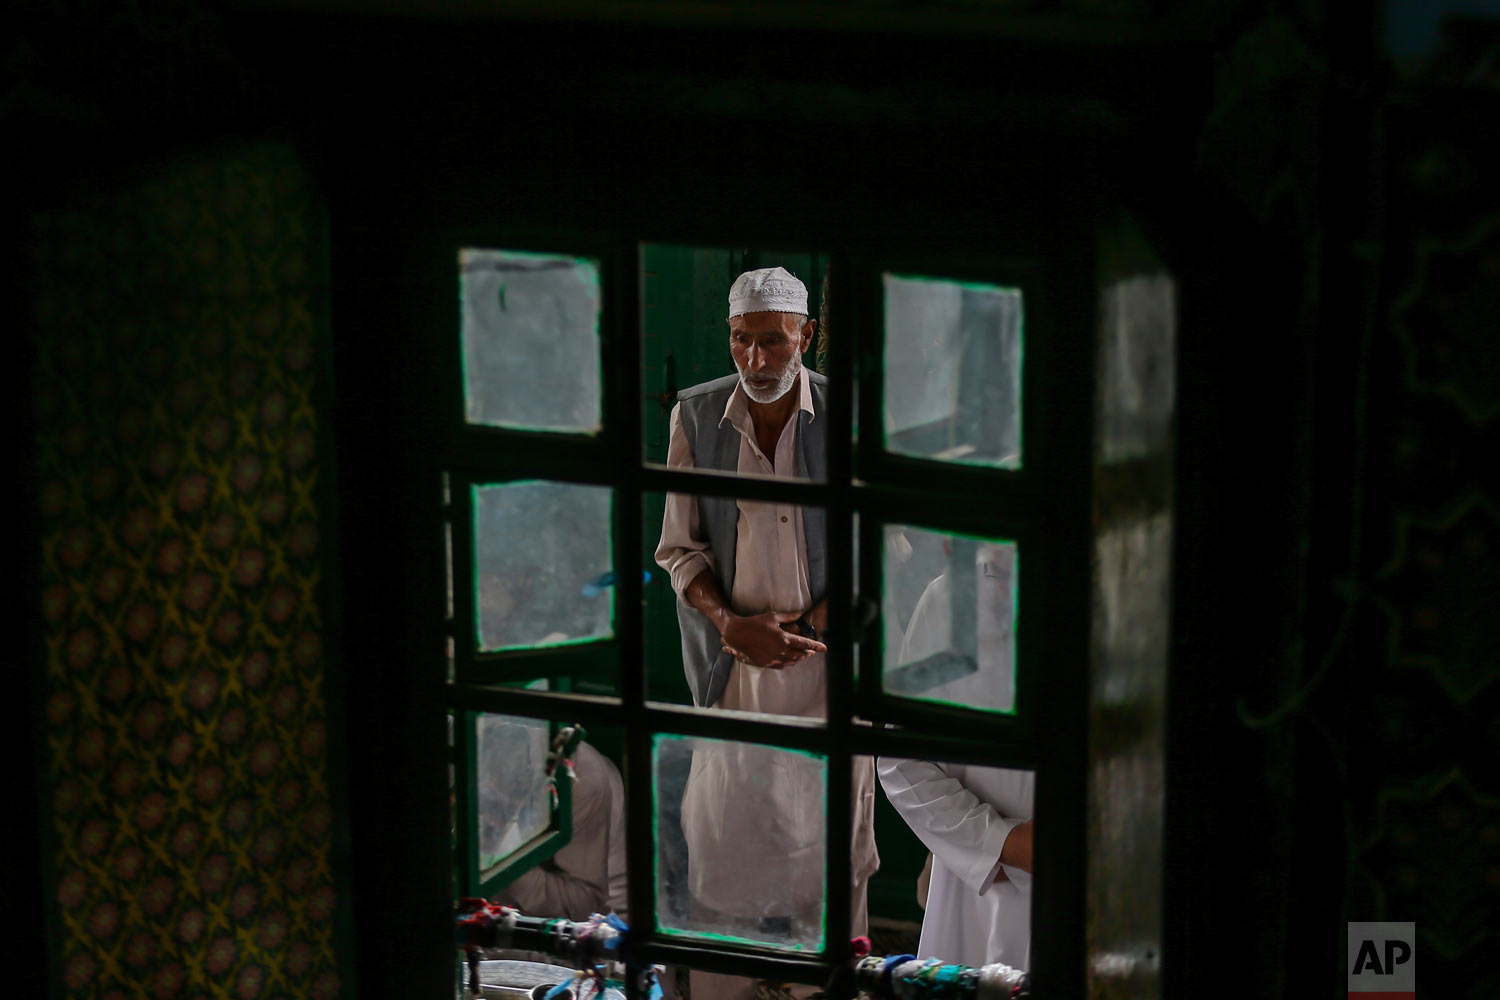  A Kashmiri man prays inside the Shah-e-Hamdan mosque during Ramadan in Srinagar, Indian controlled Kashmir, Friday, June 1, 2018. Islam's holiest month is a period of intense prayer, dawn-to-dusk fasting and nightly feasts. (AP Photo/Dar Yasin) 